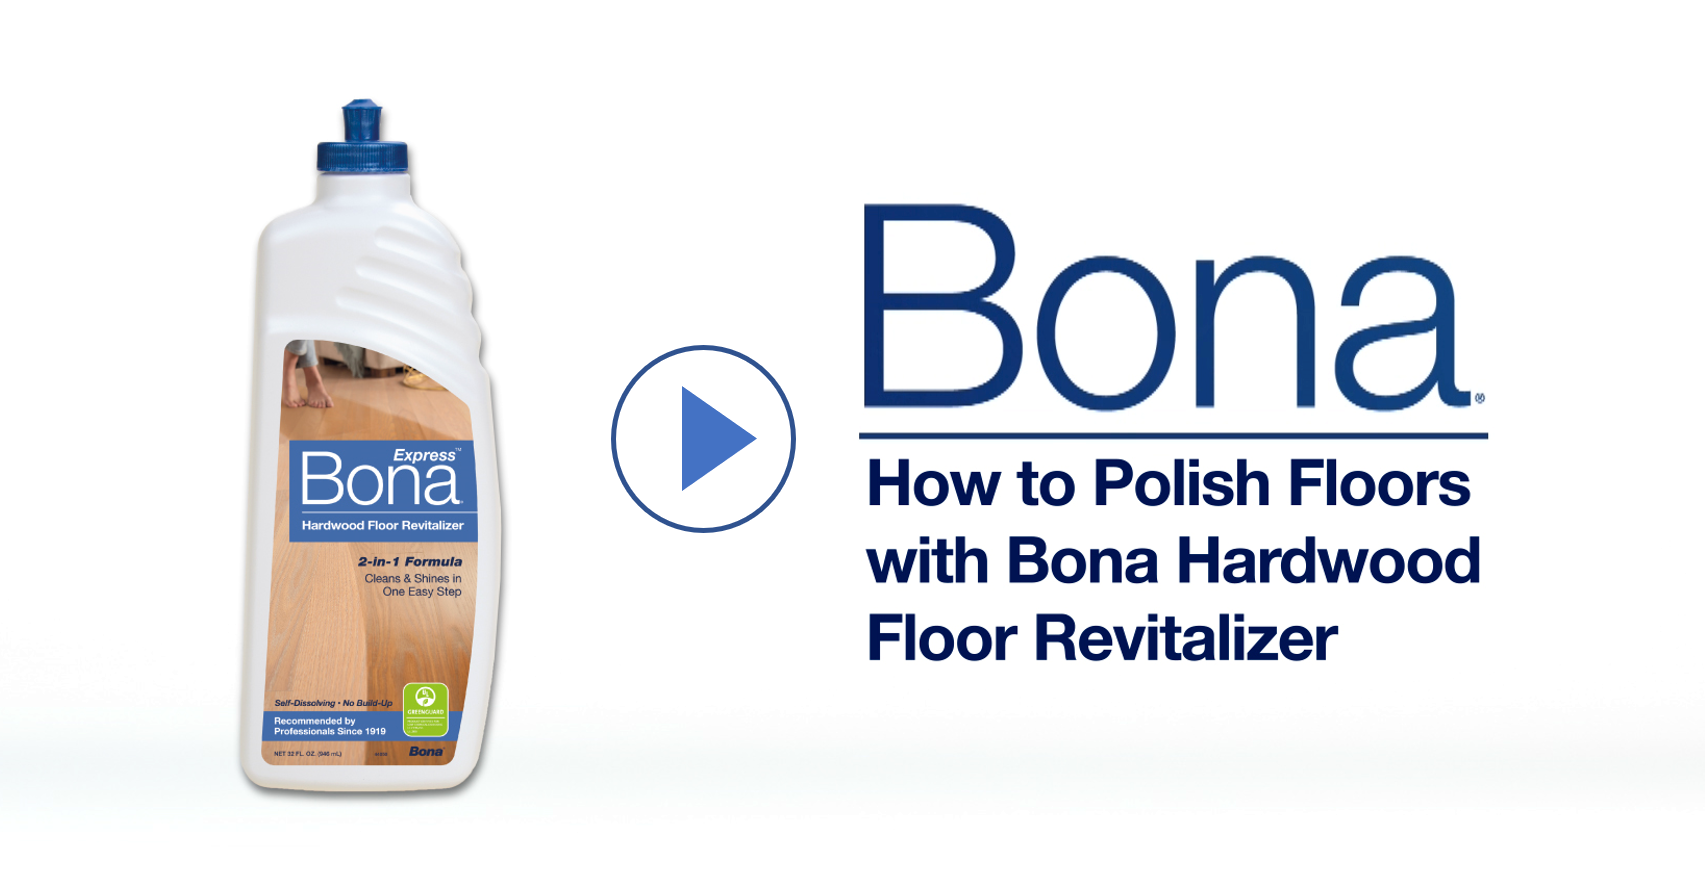 Bona Express Hardwood Floor, Bona Swedish Formula Hardwood Floor Cleaner